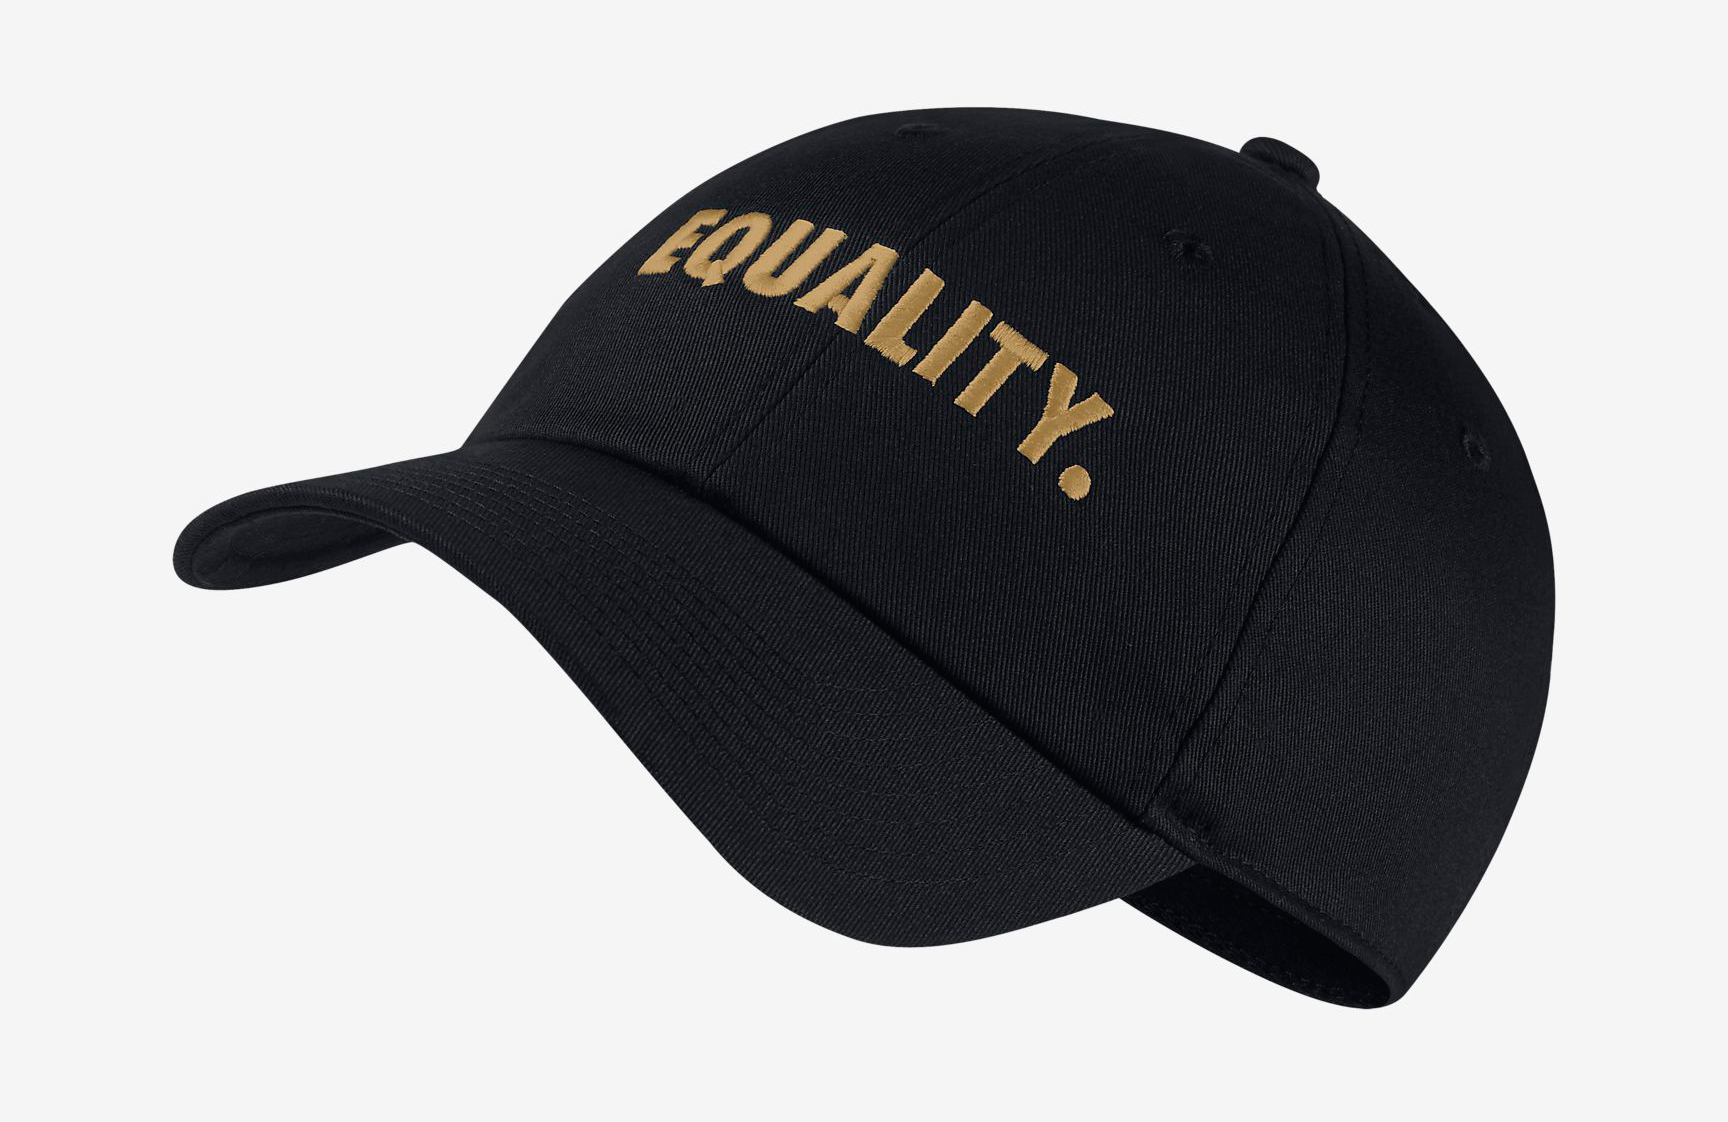 equality hat nike